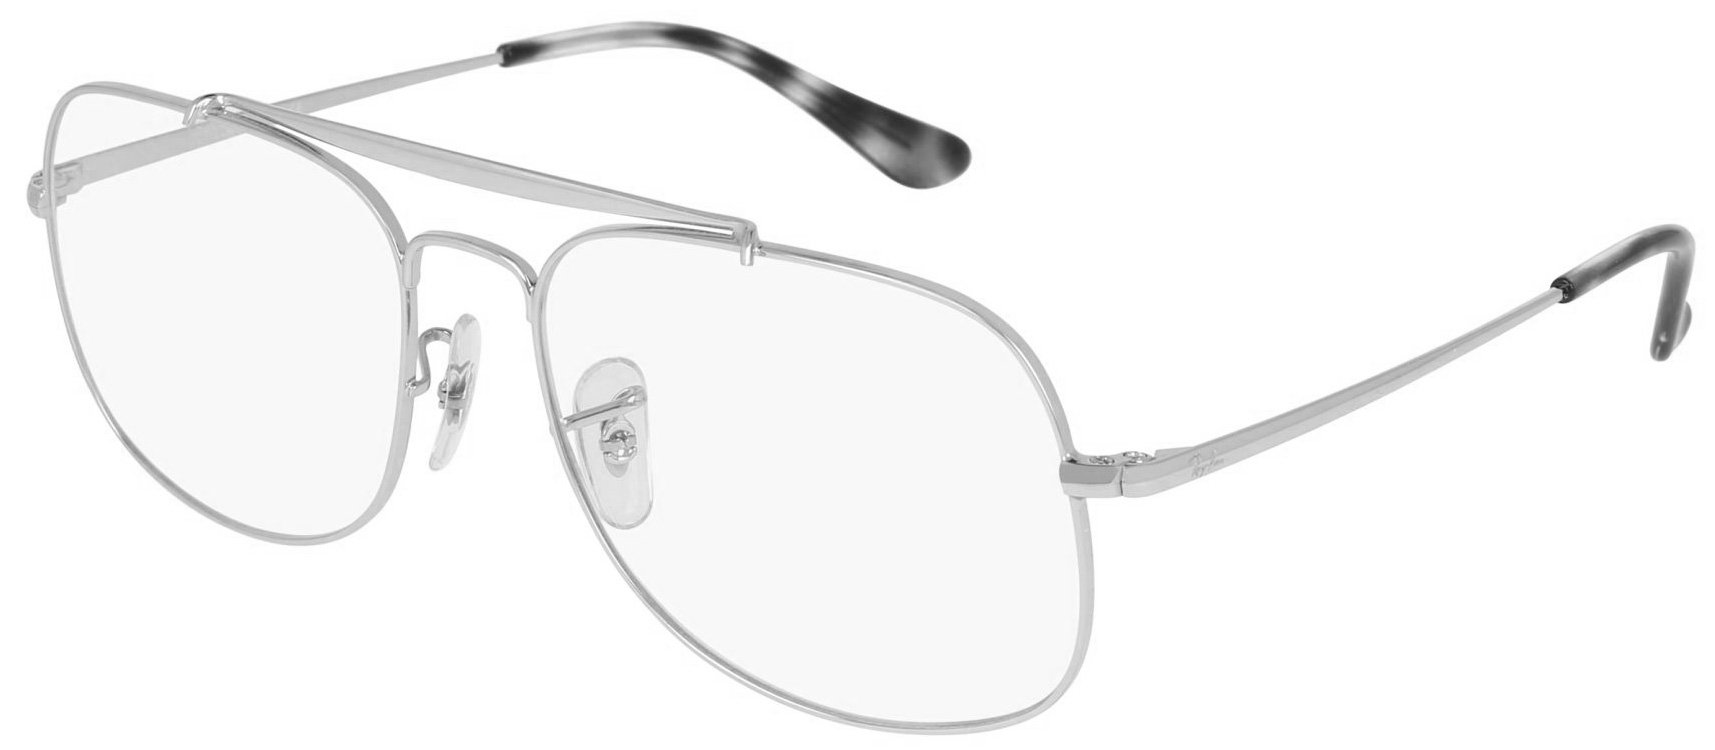 ray-ban-rx-6389-the-general-eyeglasses-silver.jpg